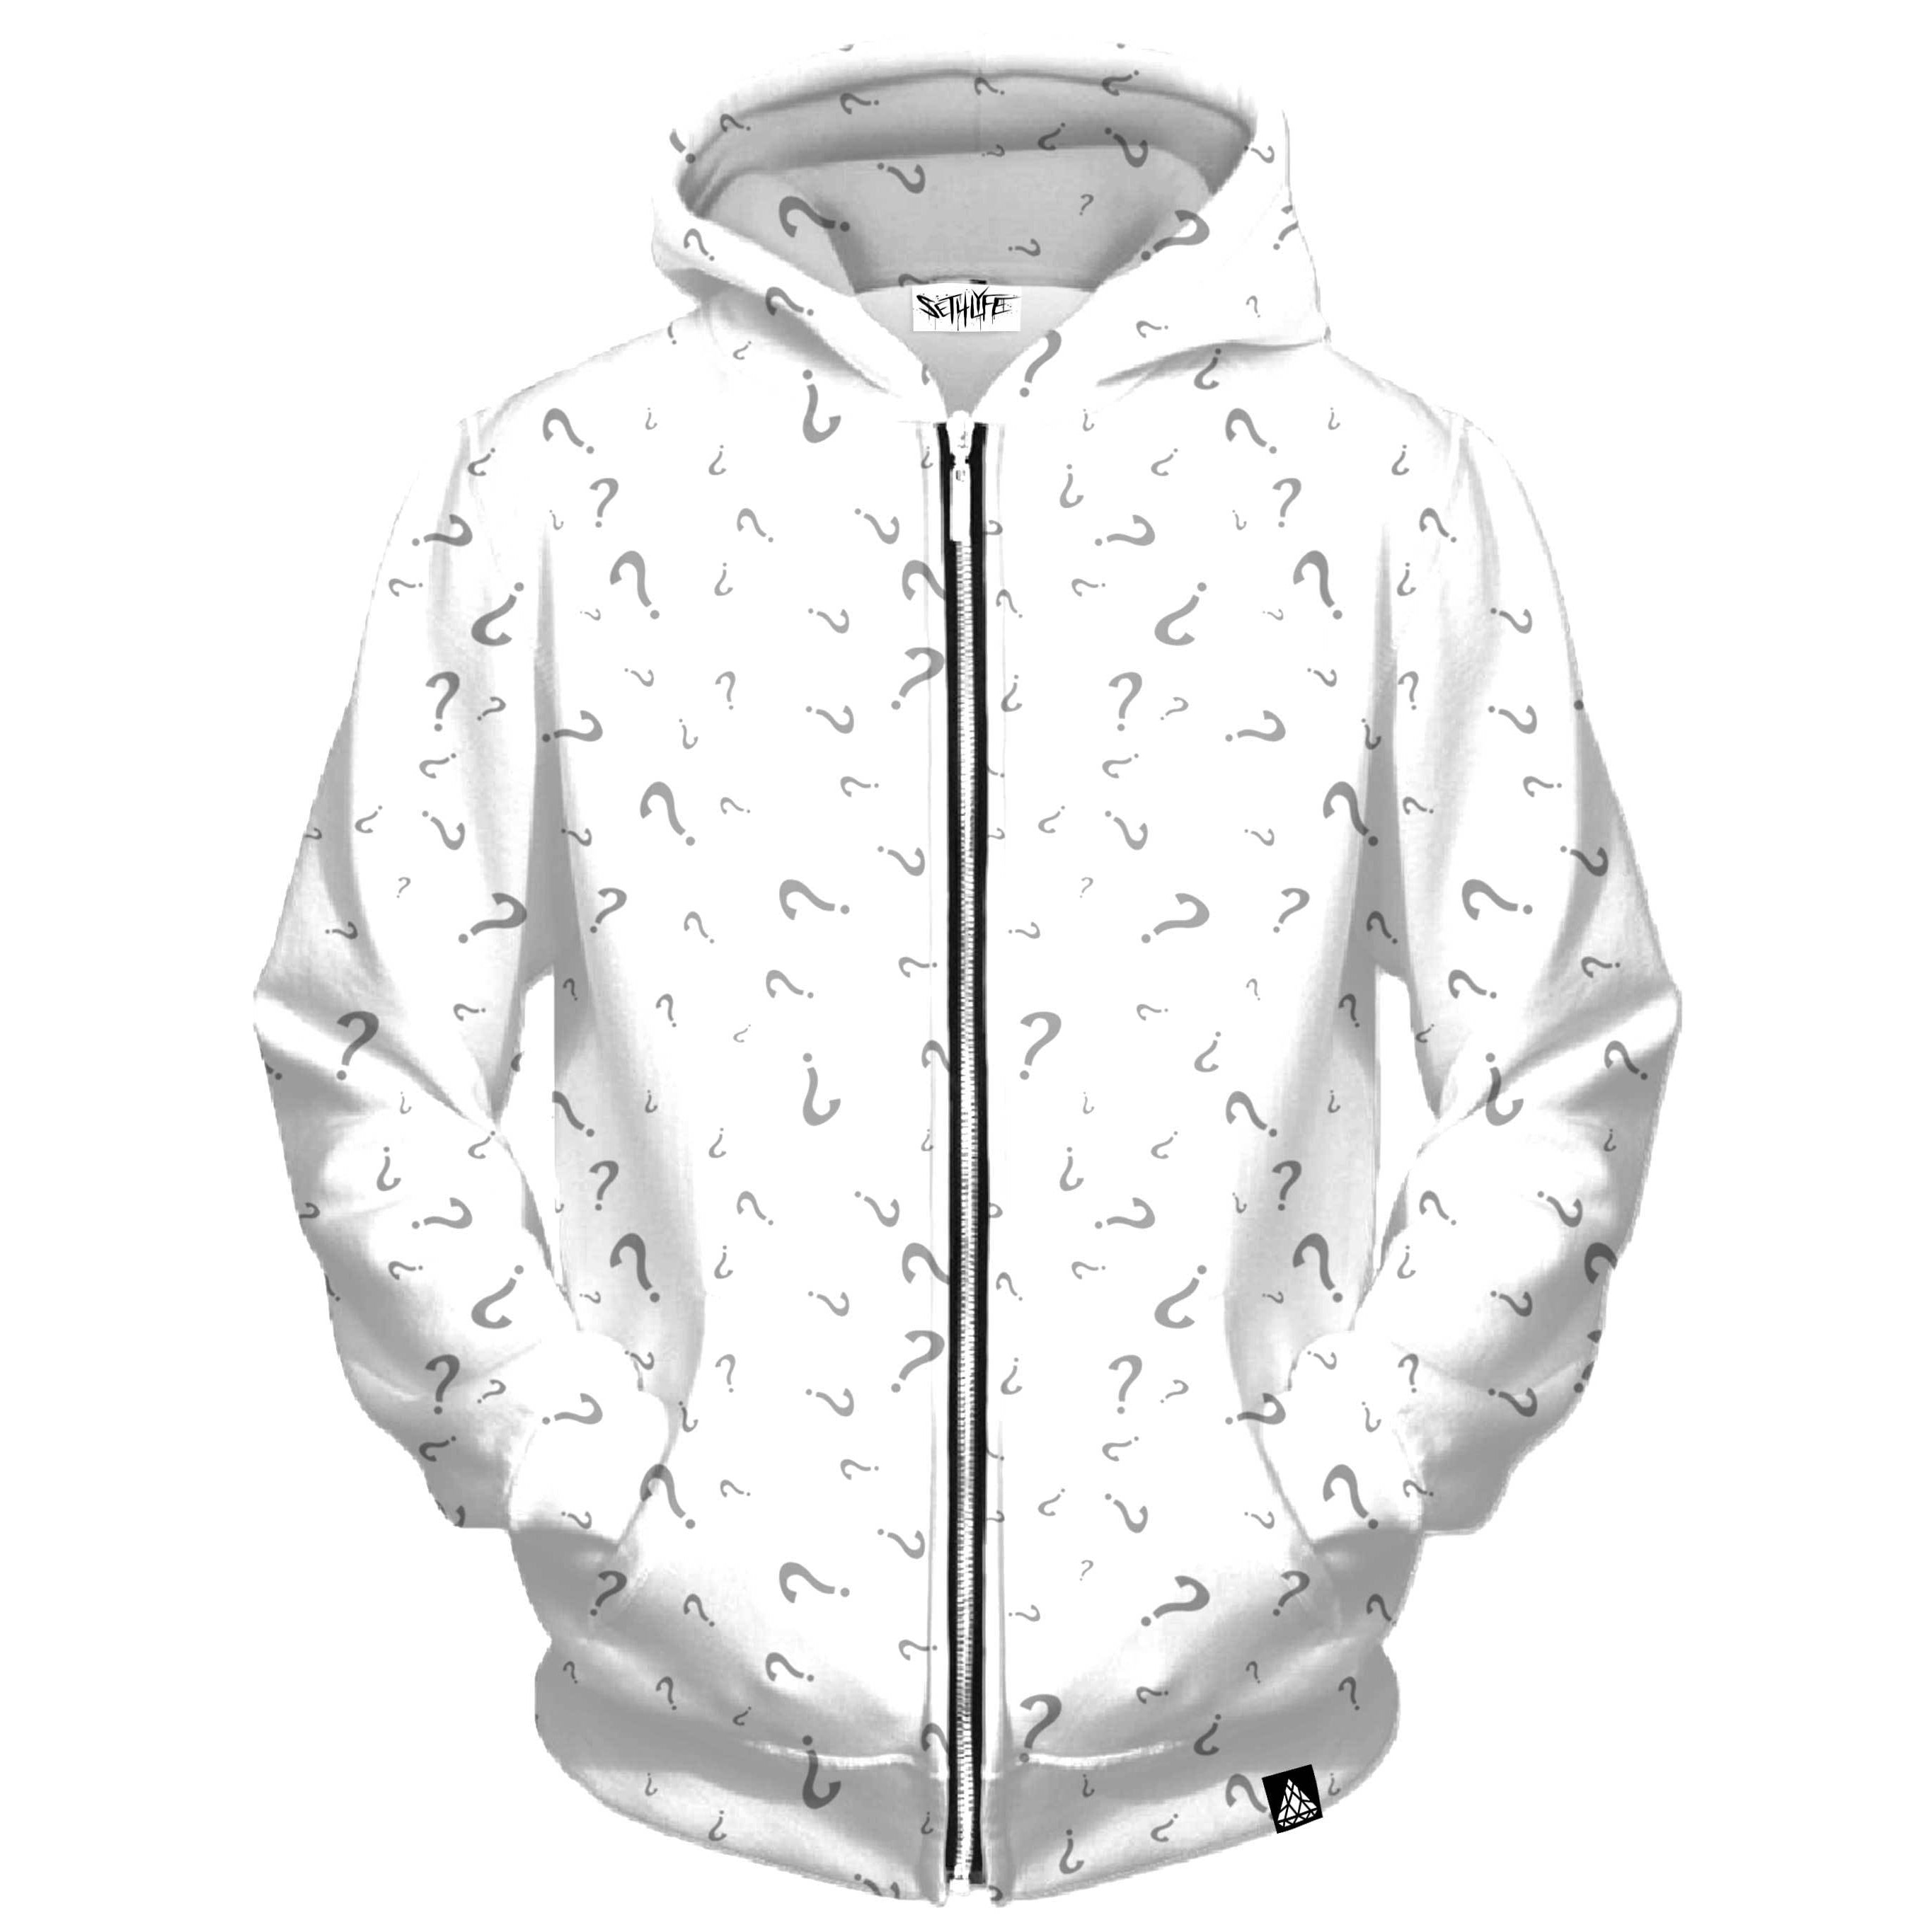 cheap custom zip up hoodies